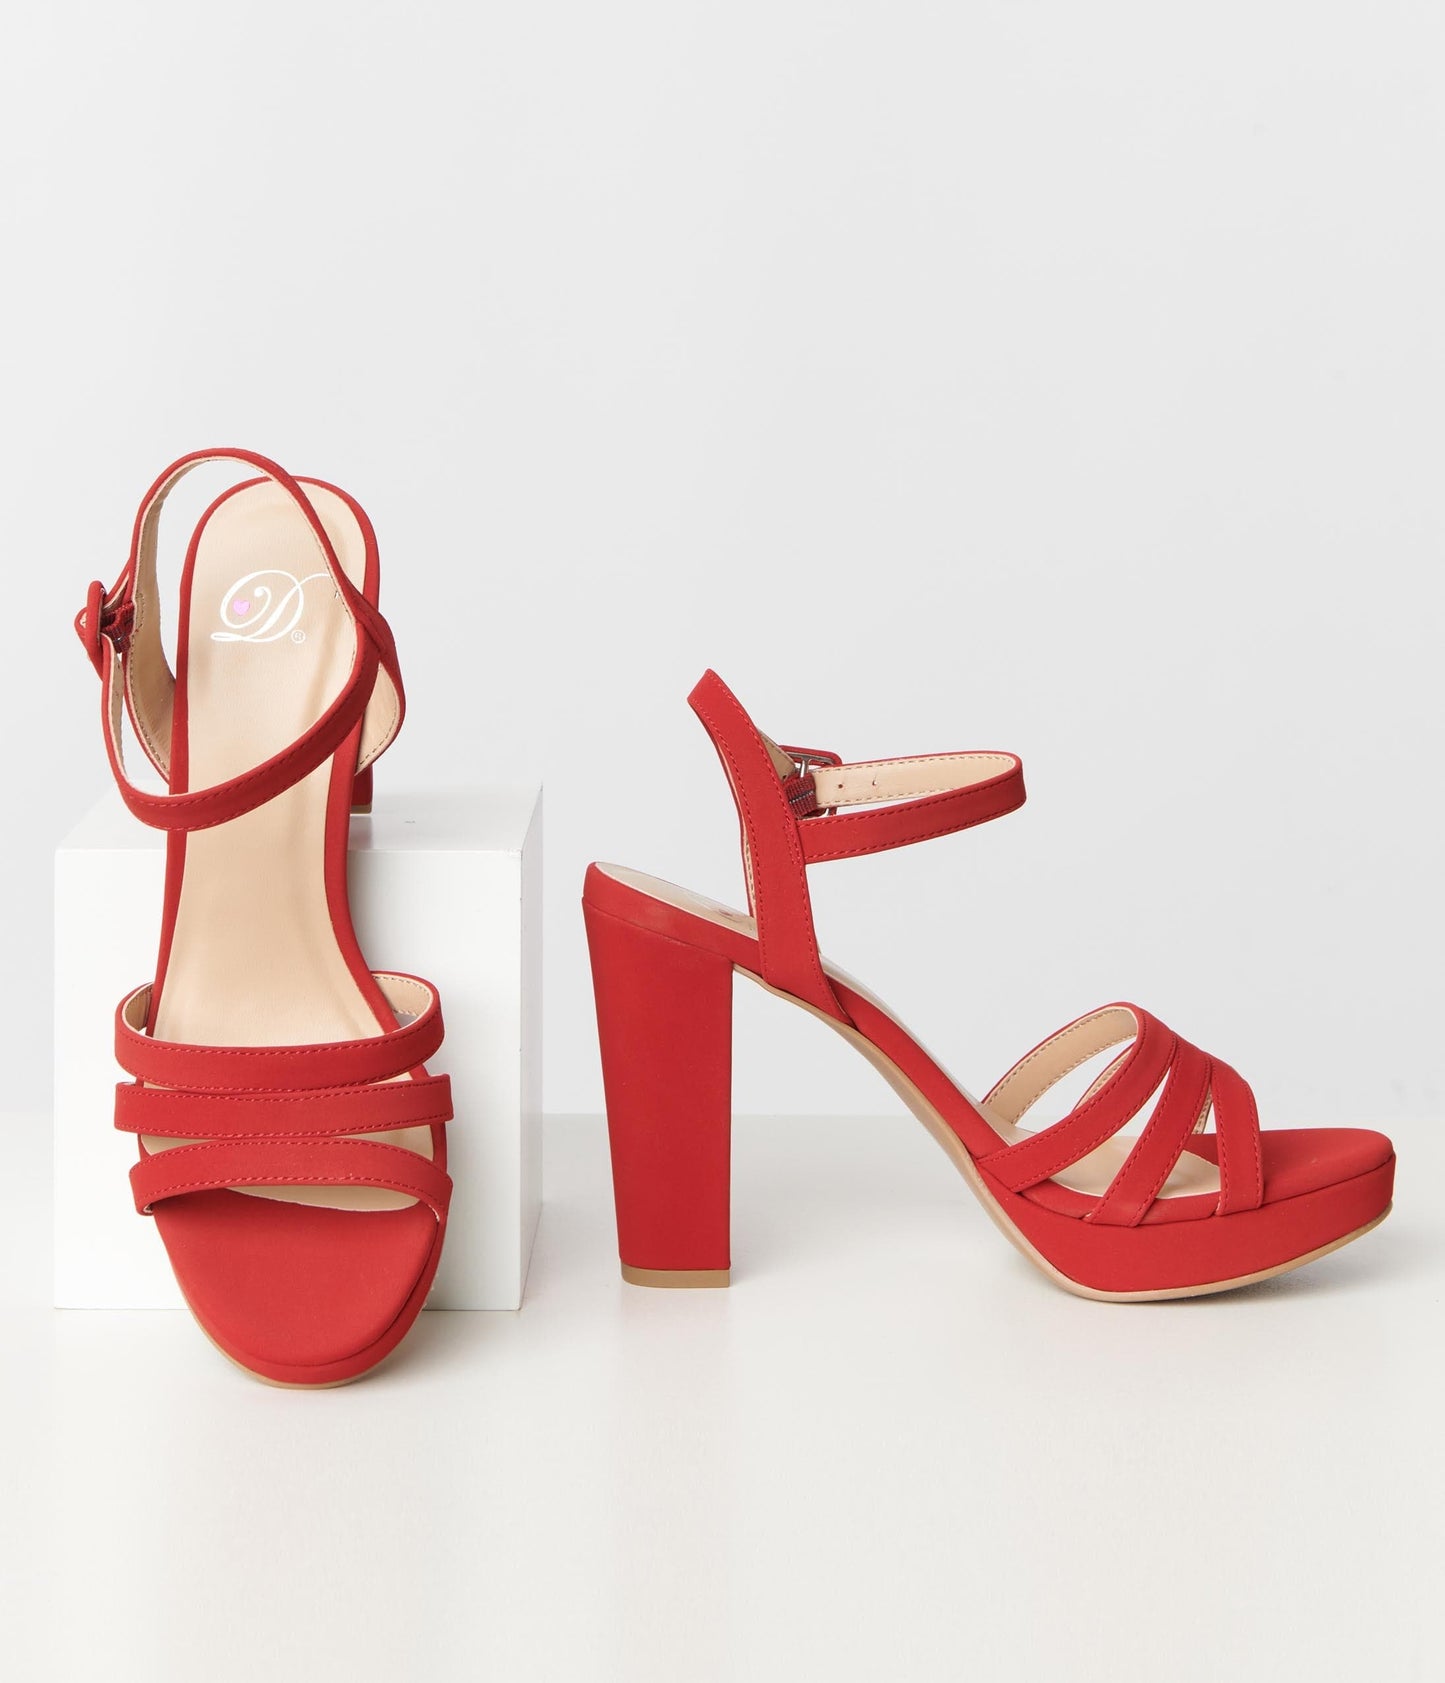 Lipstick Red Platform Heel Sandals